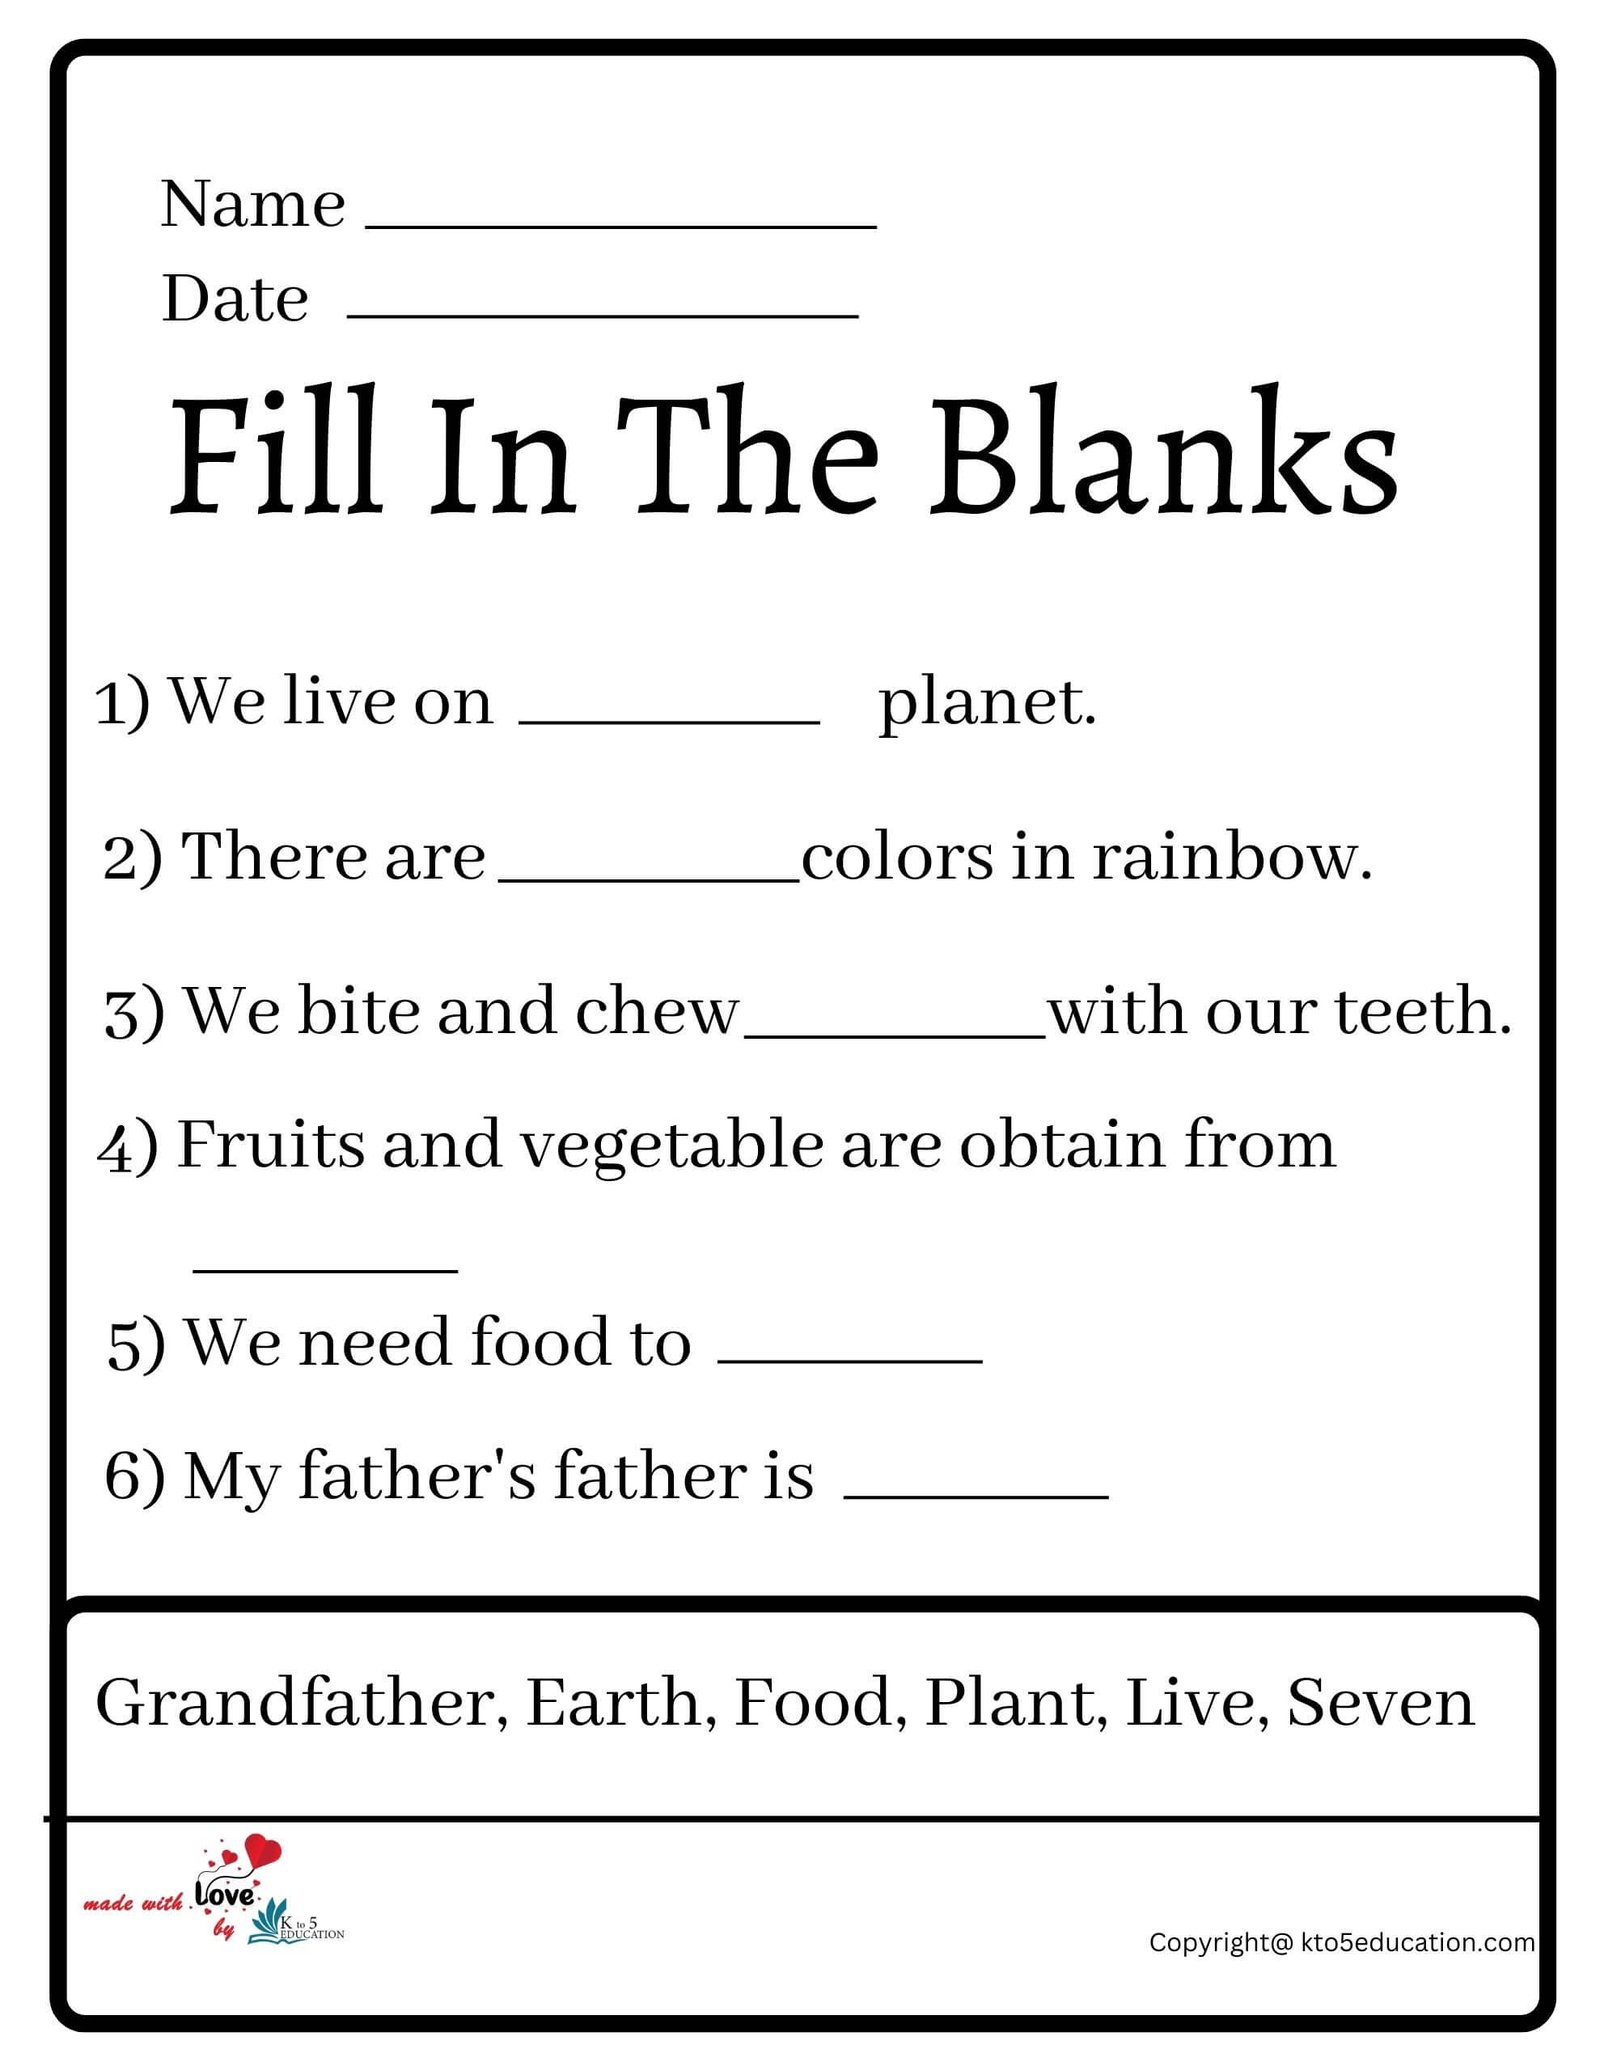 Fill In The Blanks Worksheet